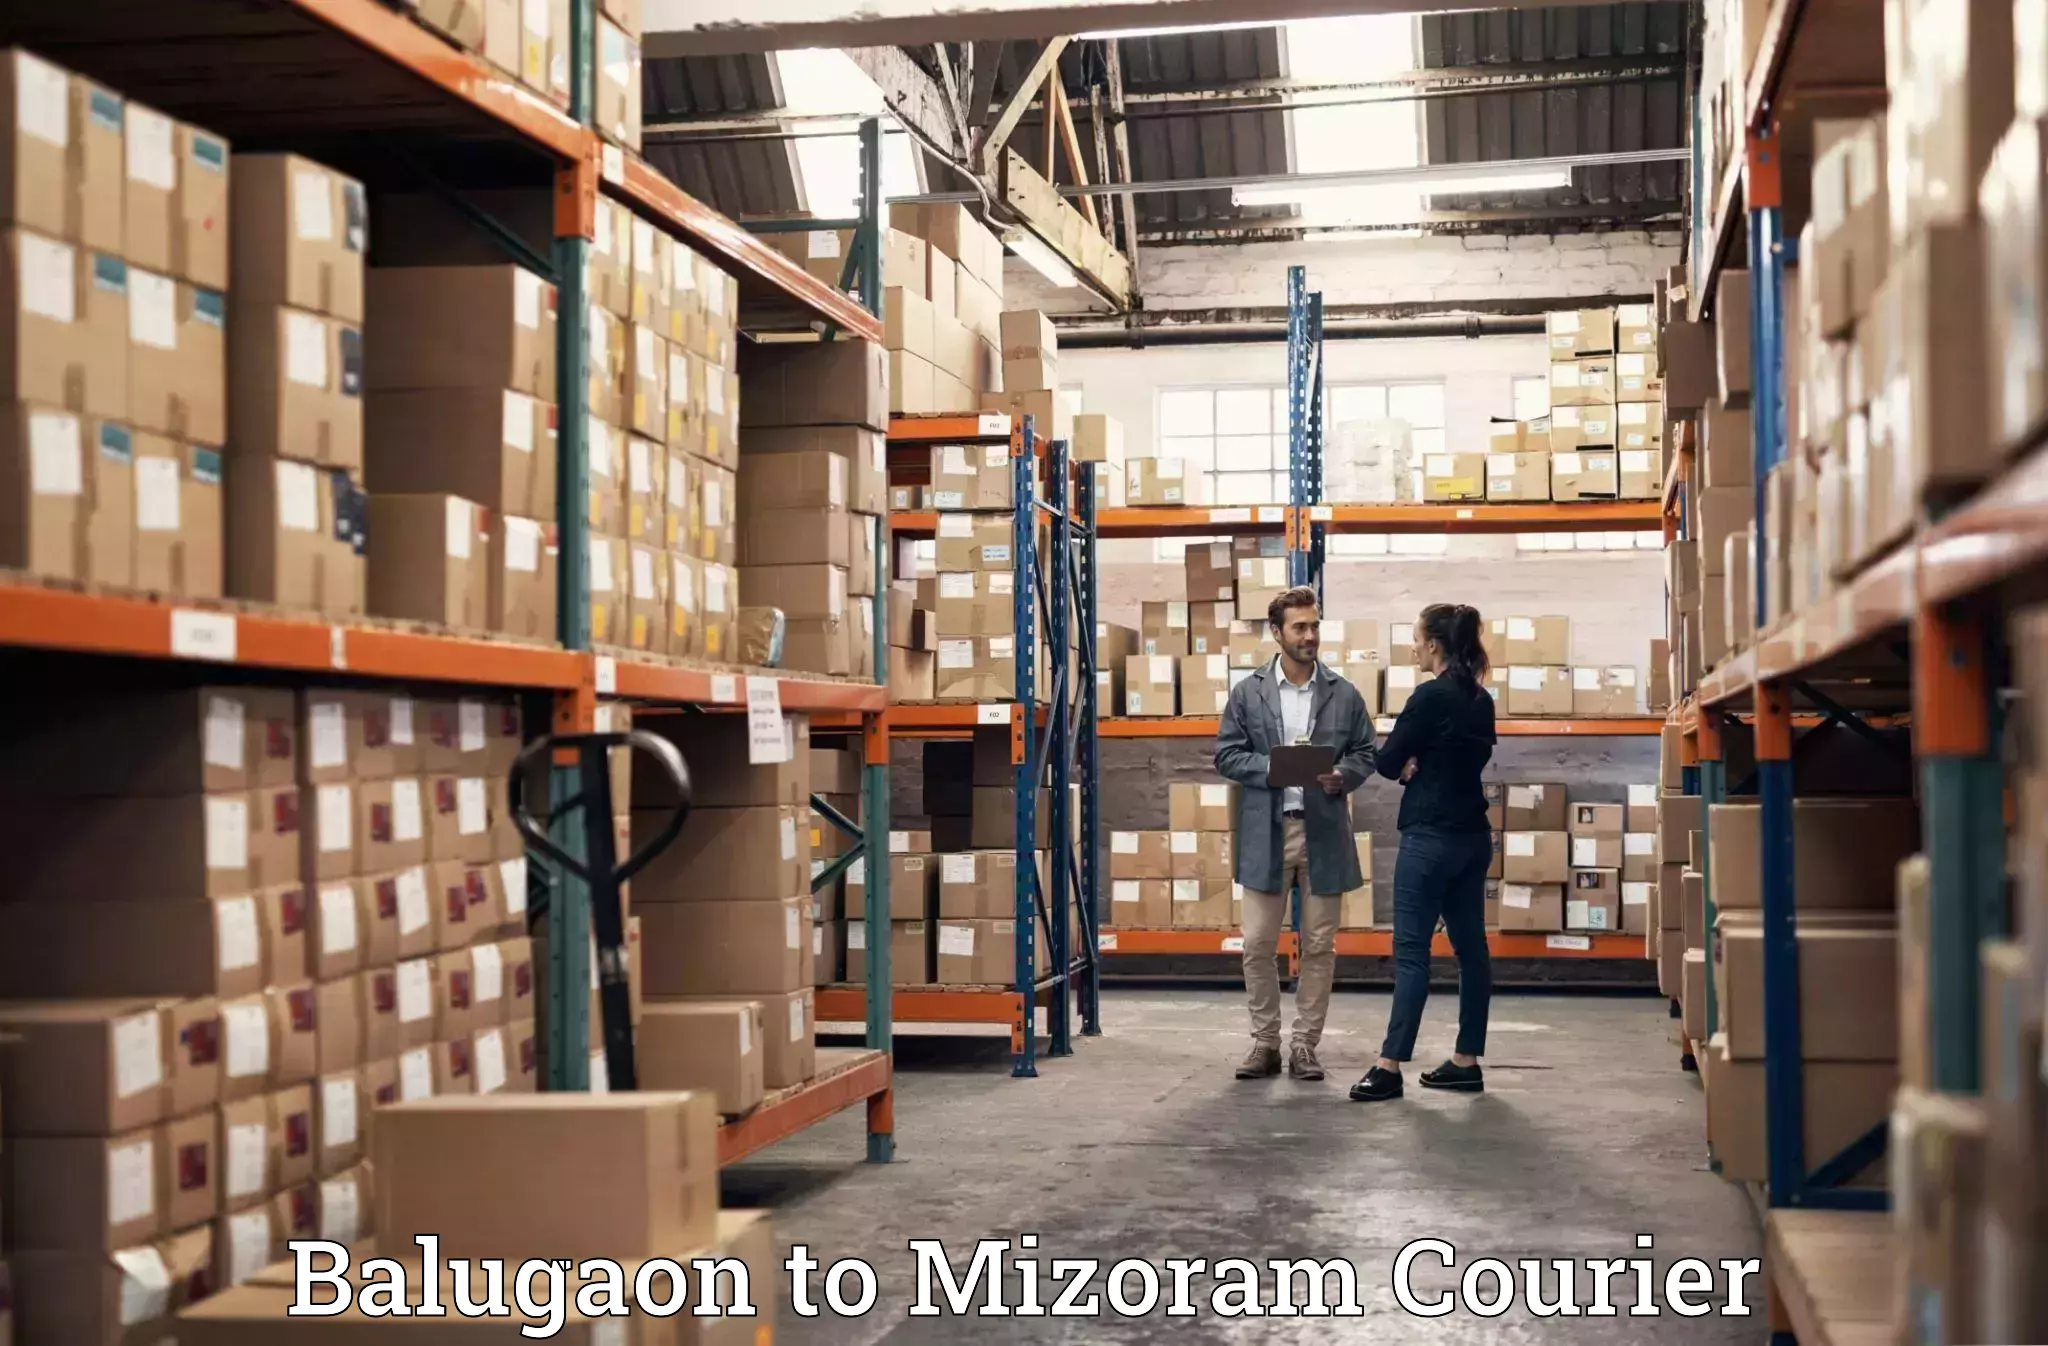 Professional moving company Balugaon to Darlawn